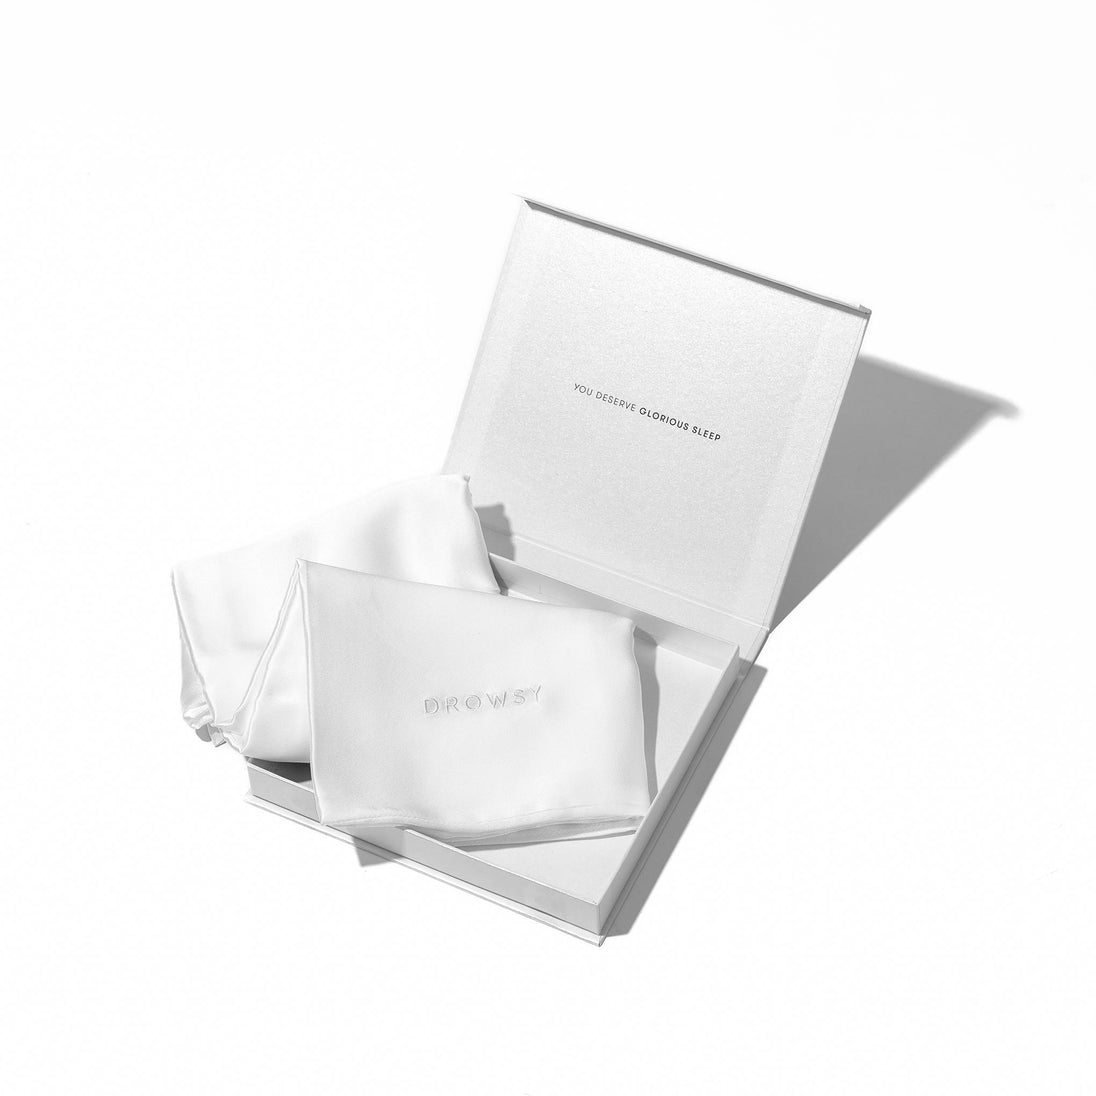 White pillowcase box opening with white silk pillowcase inside